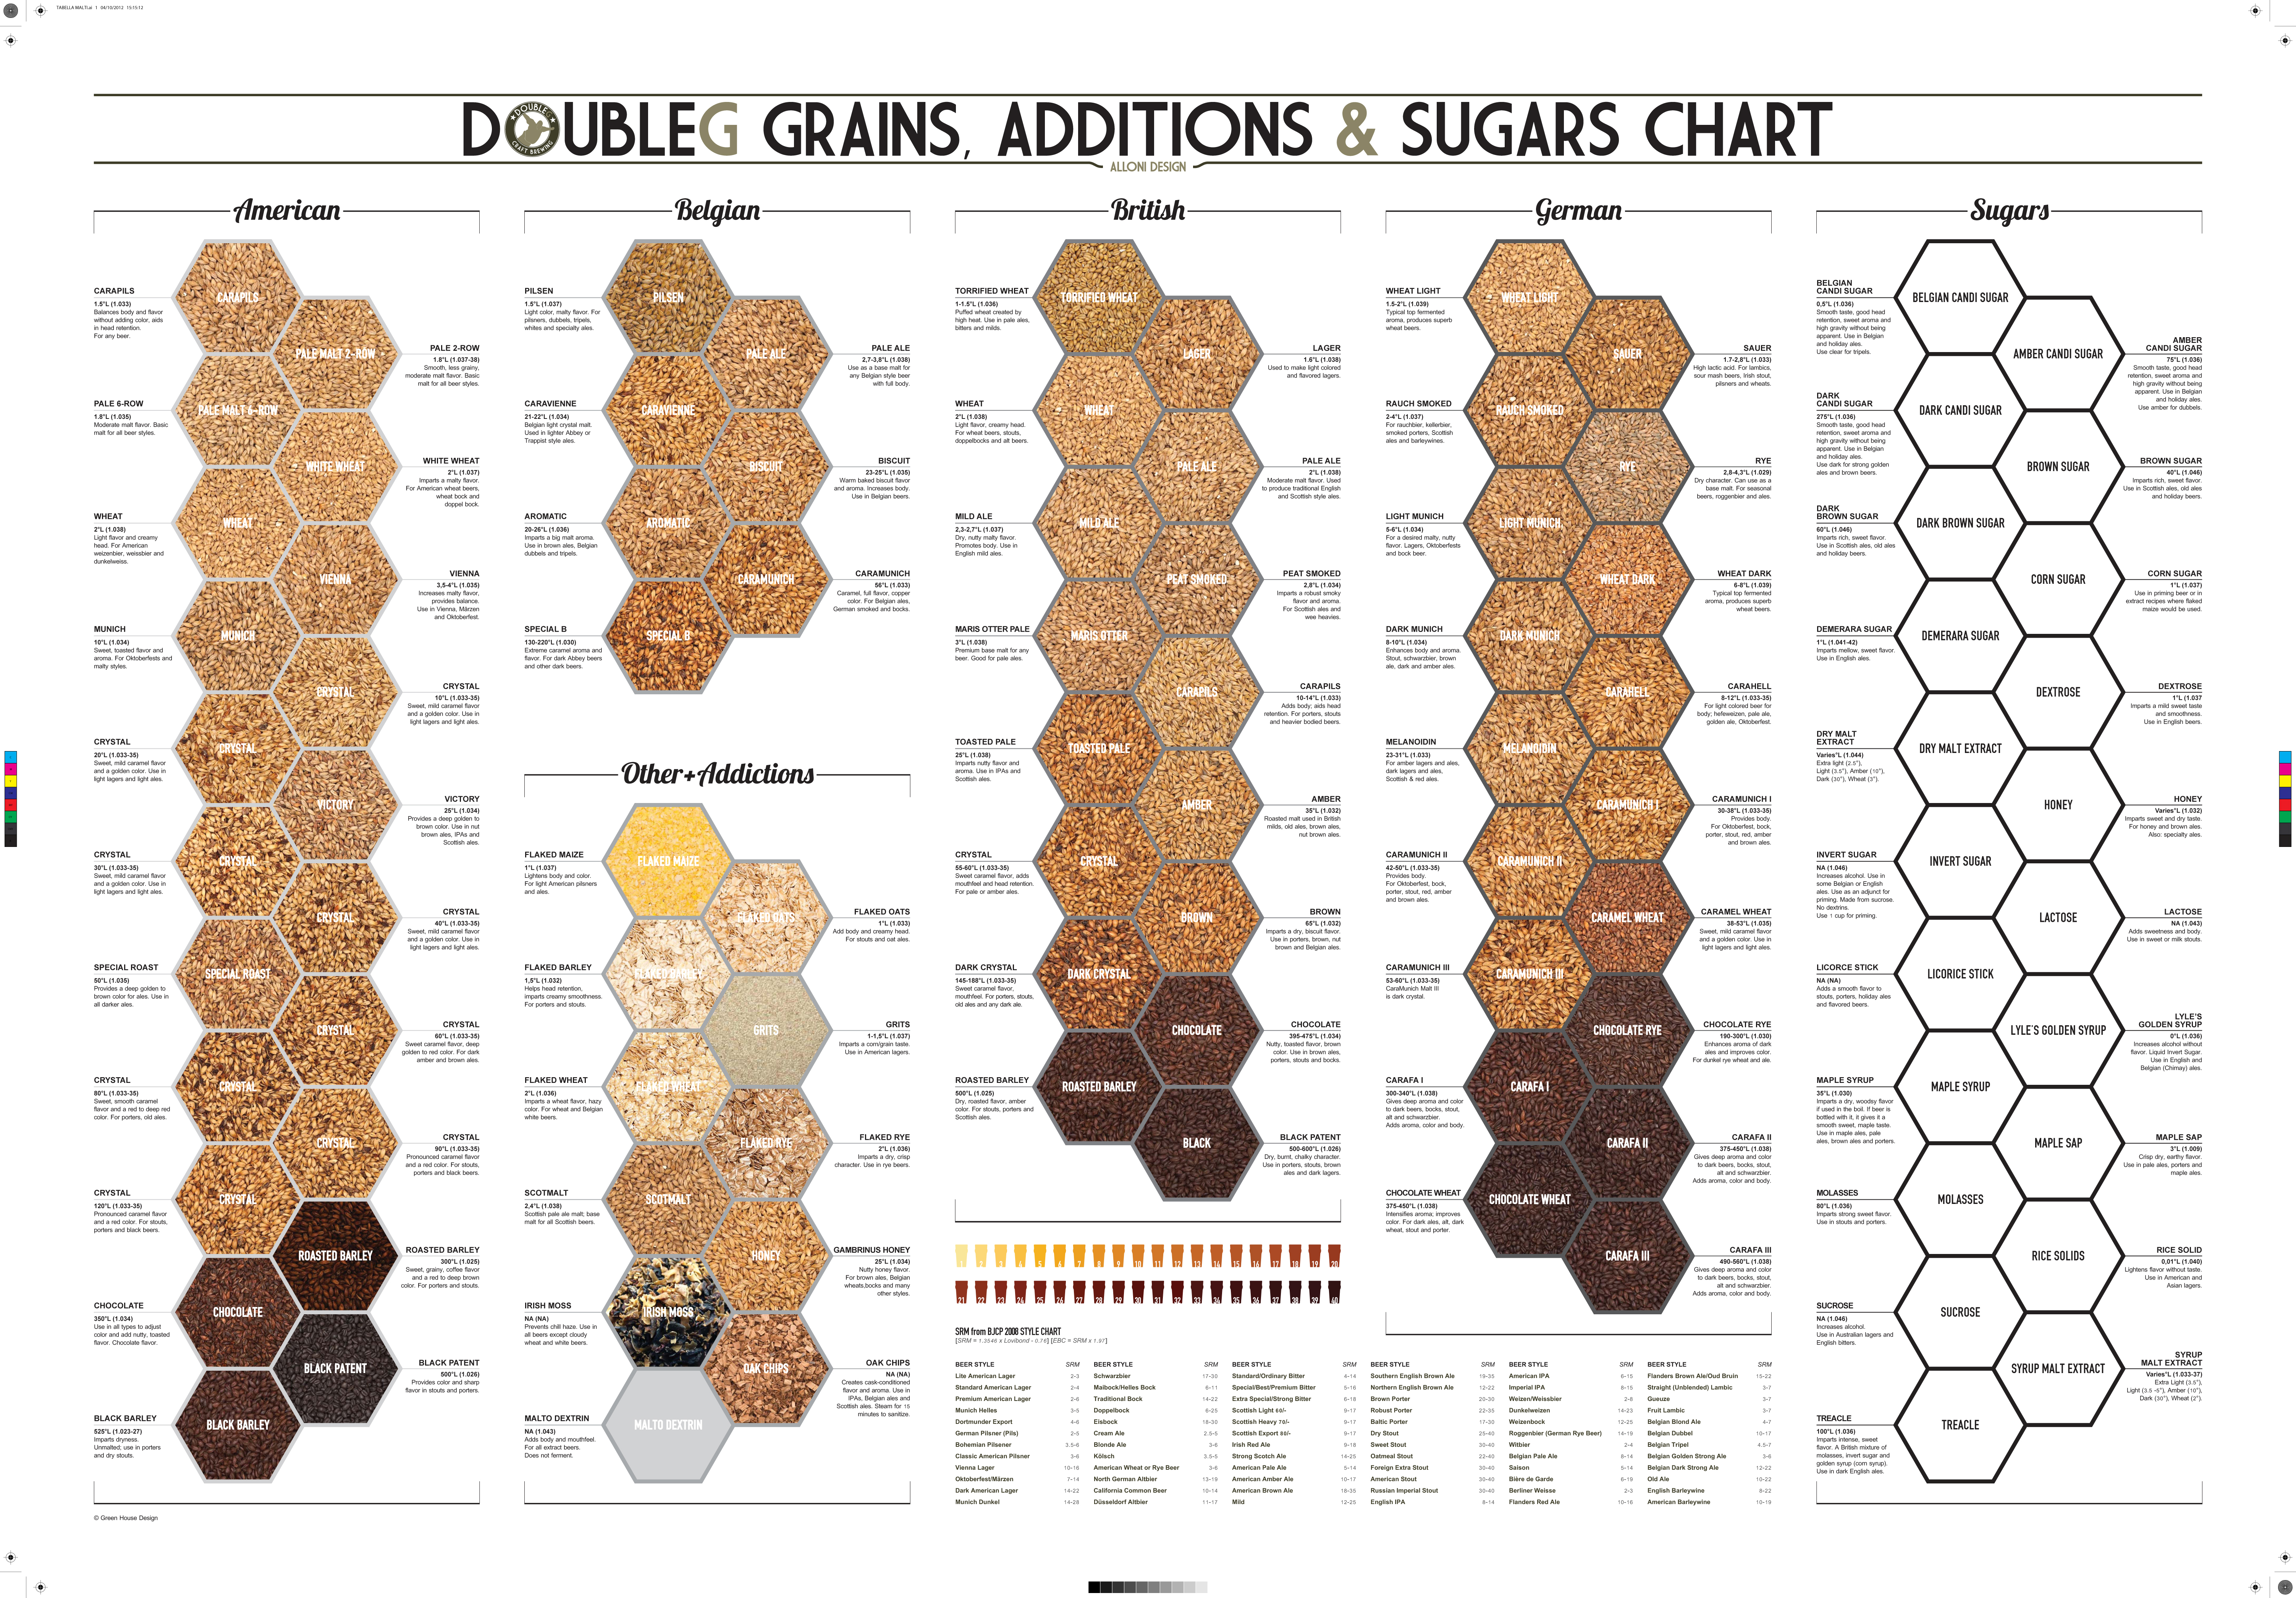 Grains, Additions & Sugars Chart